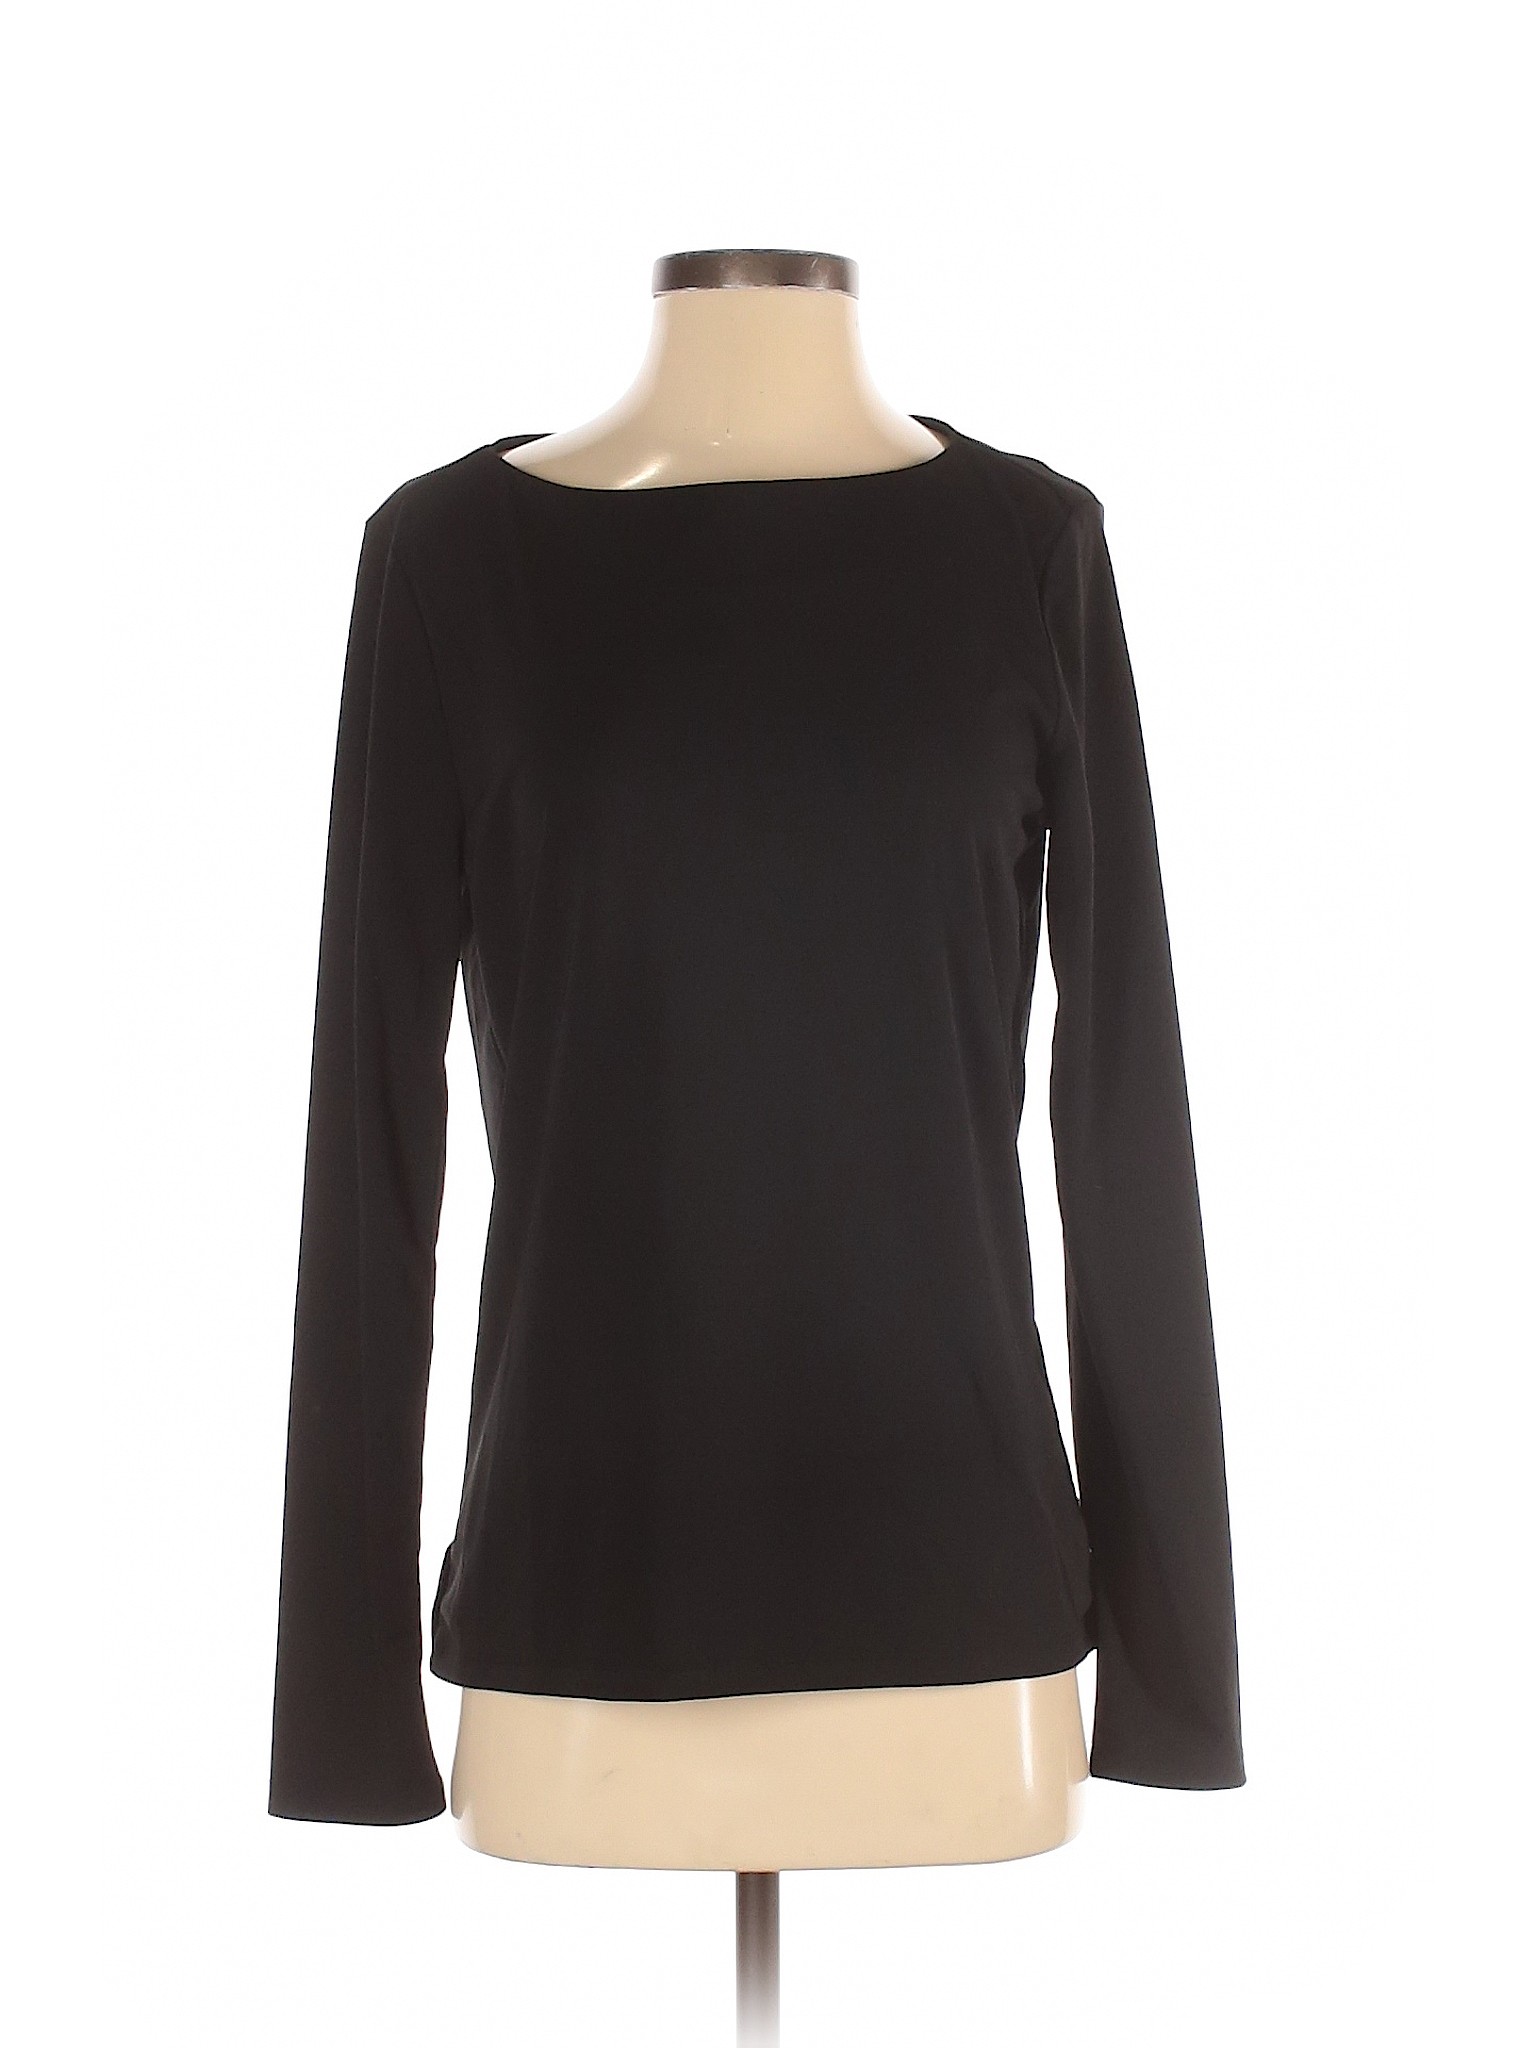 NWT Ann Taylor Women Black Long Sleeve Blouse S | eBay